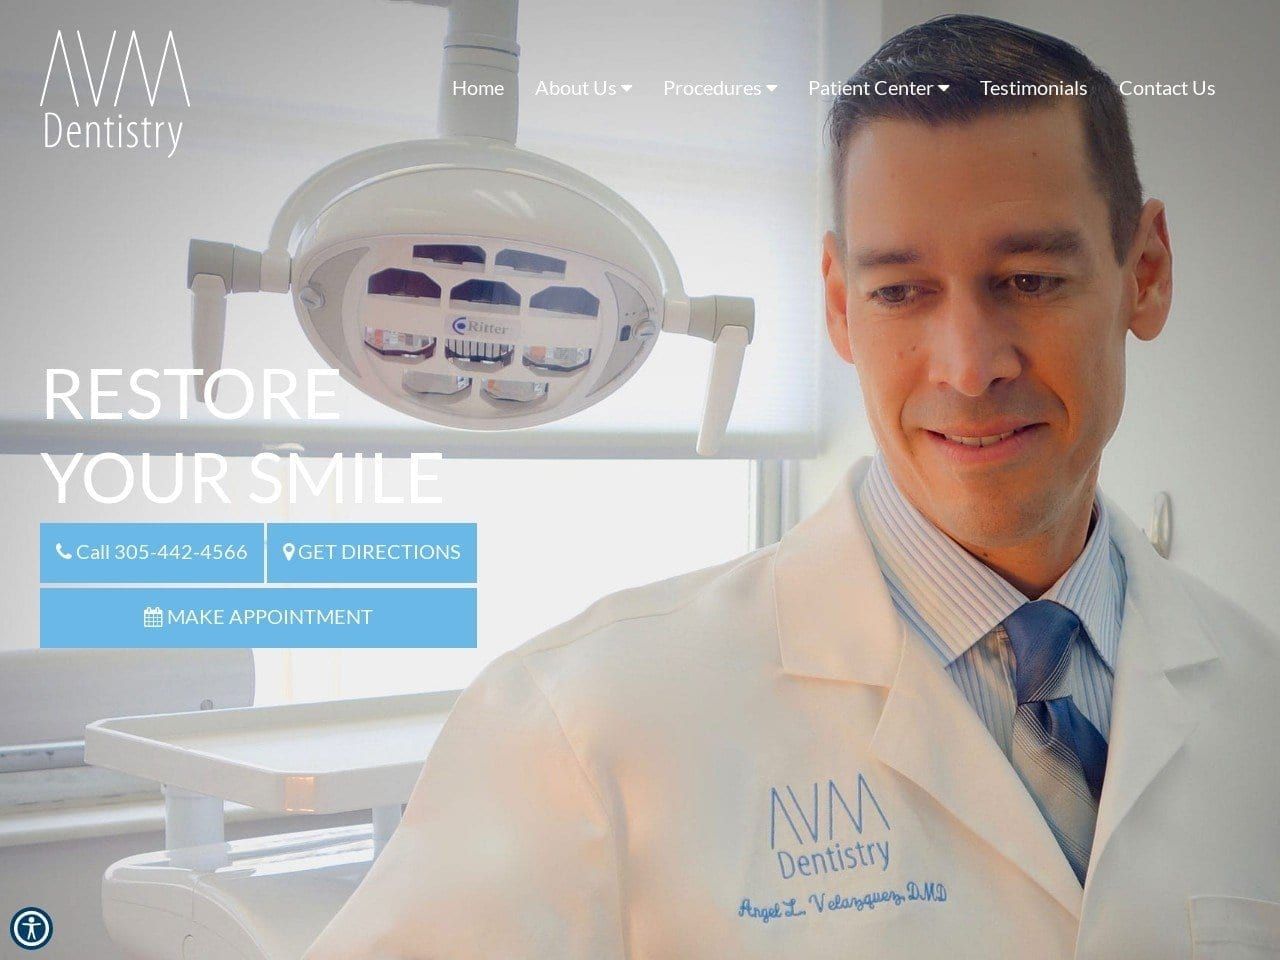 Avm Dentist Website Screenshot from avmdentistry.com